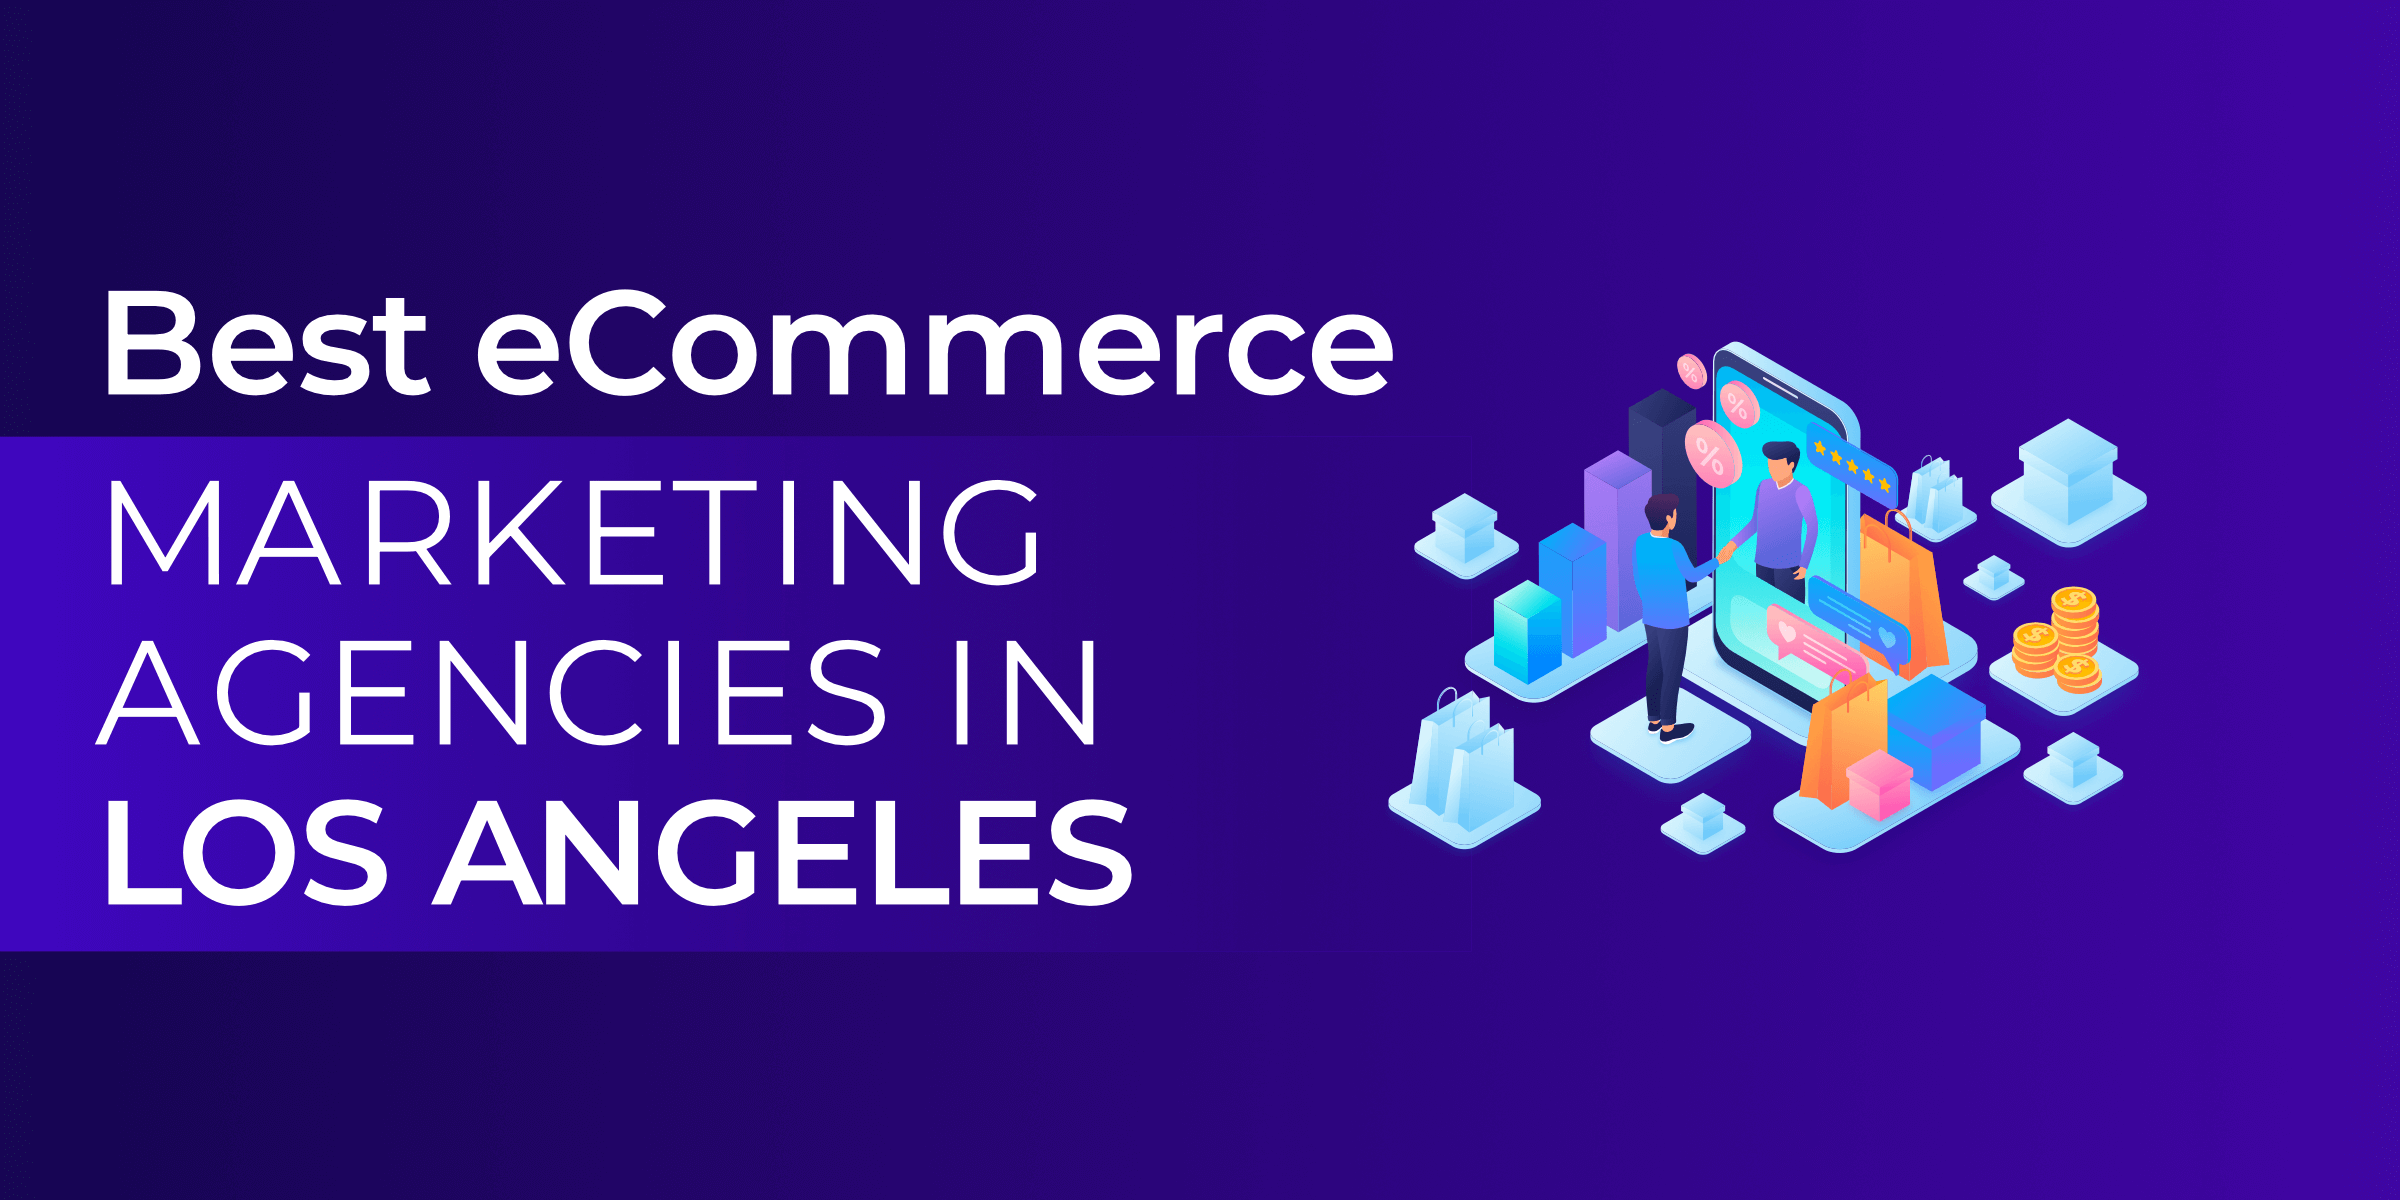 Best eCommerce Marketing Agencies in Los Angeles